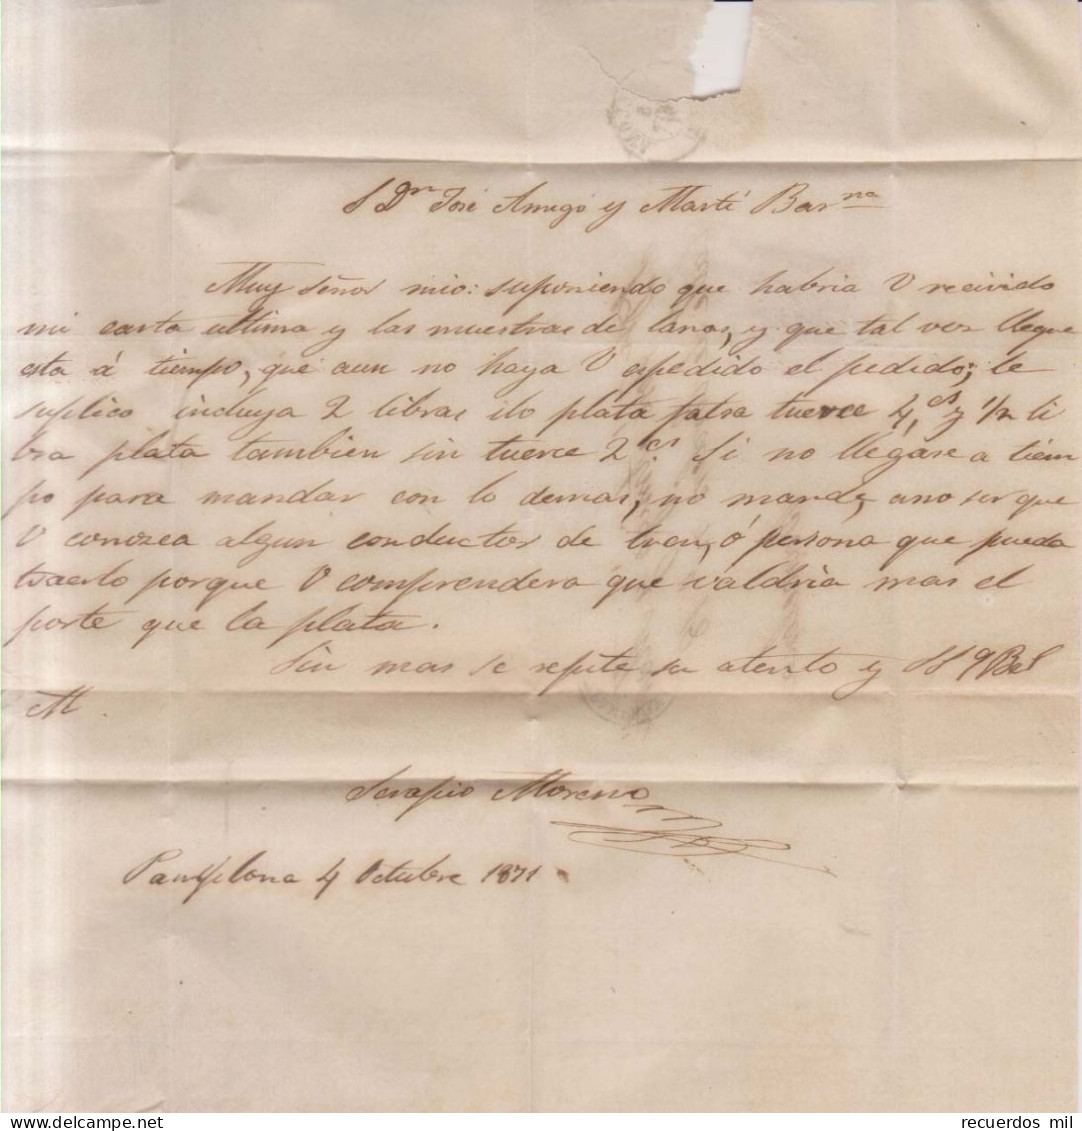 Año 1870 Edifil 107 Alegoria Carta Matasellos Rombo Pamplona Serapio Moreno - Lettres & Documents